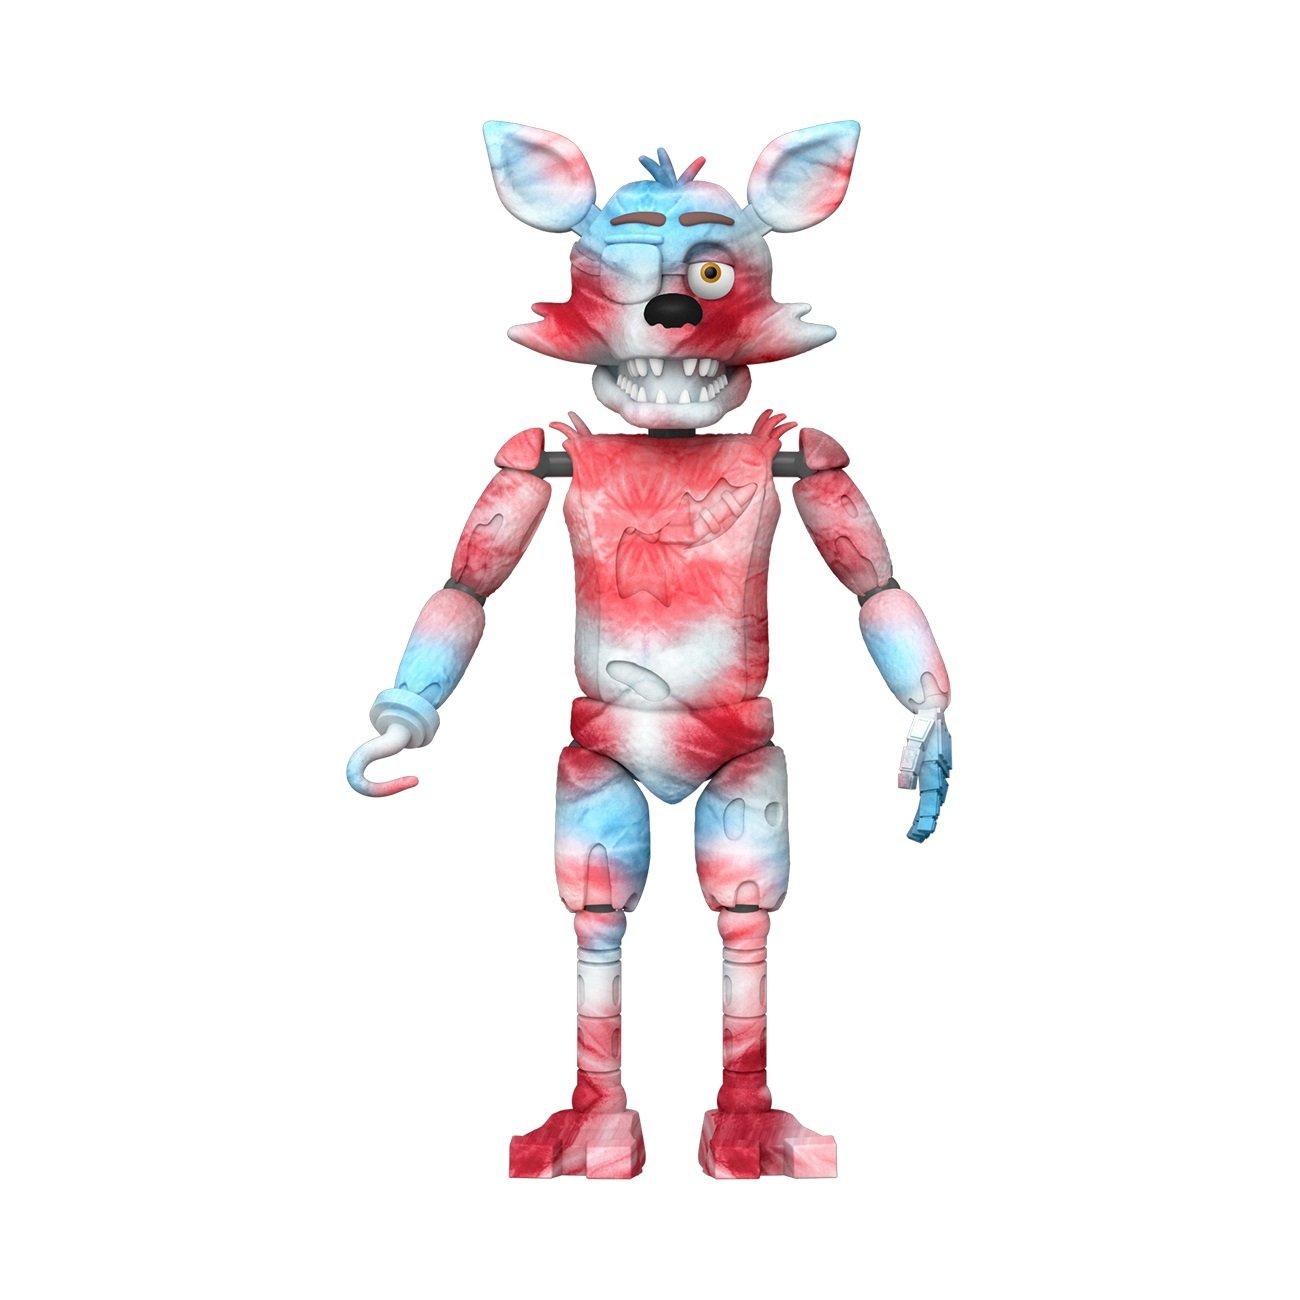 Funko Five Nights at Freddy's Tie-Dye Foxy Plush | GameStop